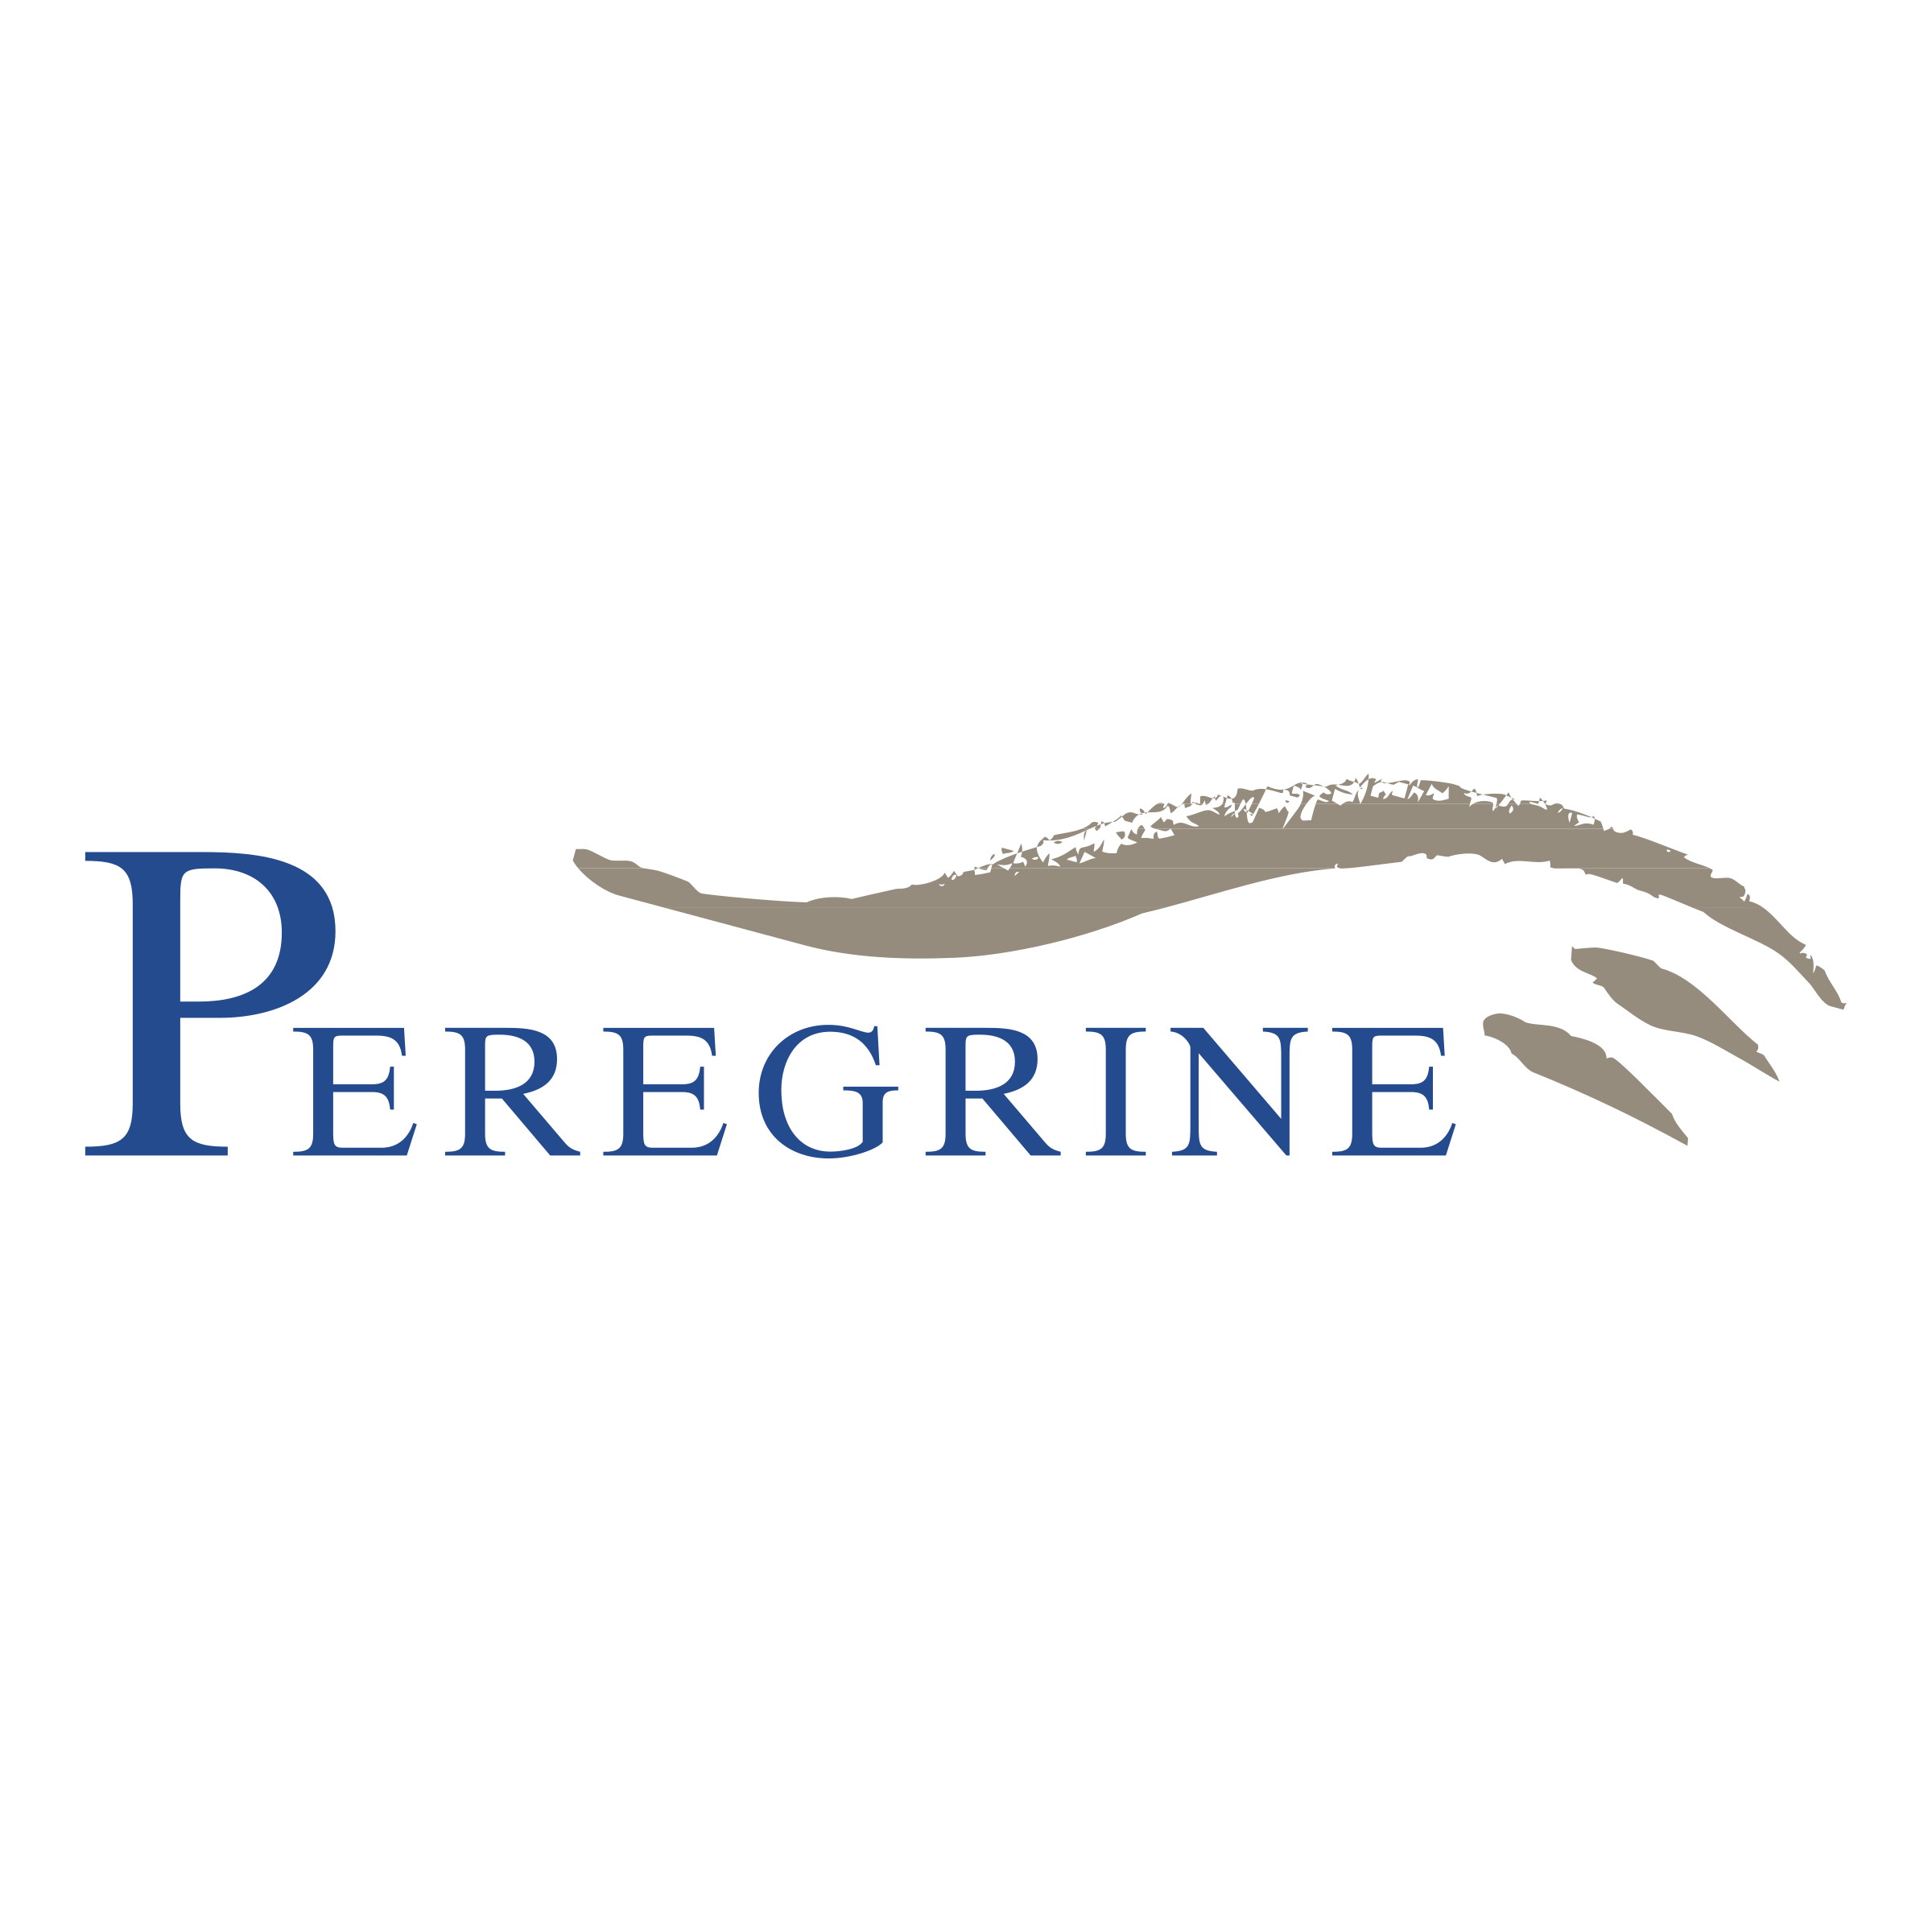 Peregrine Logo - Peregrine Logo PNG Transparent & SVG Vector